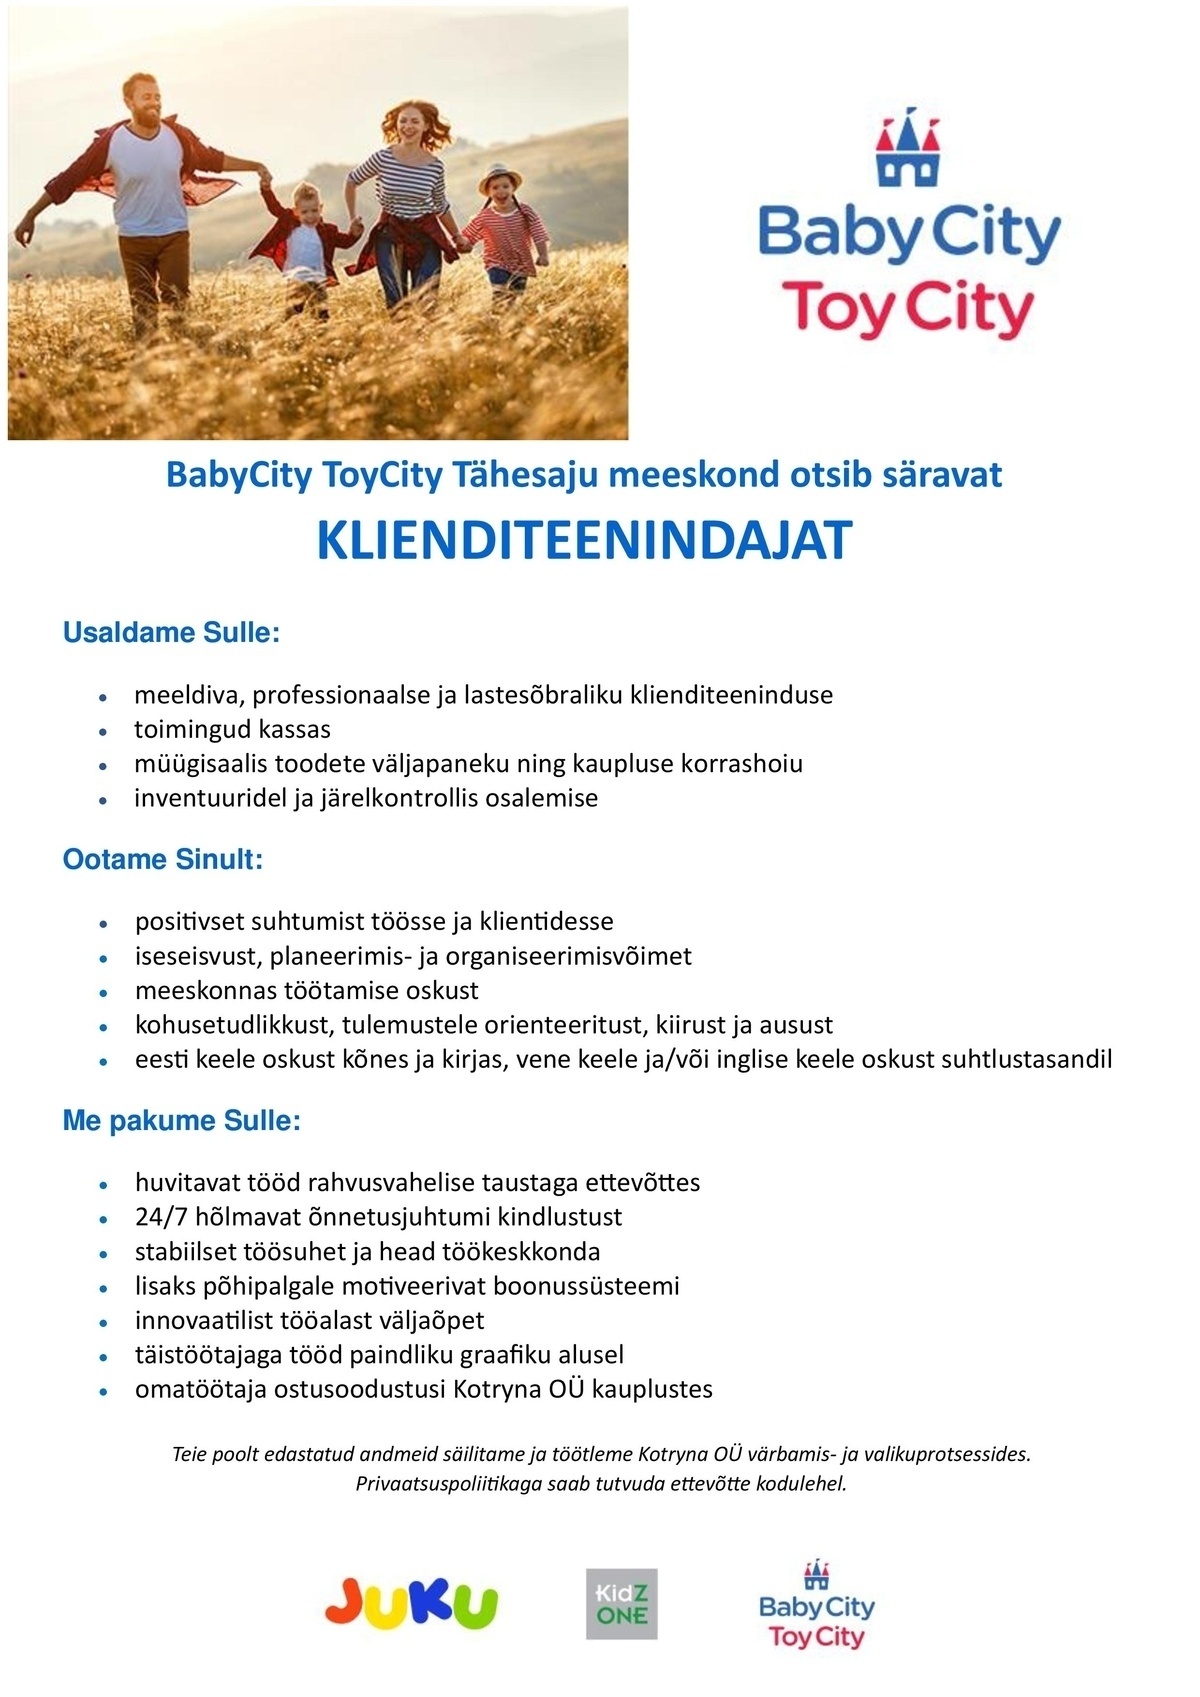 Kotryna OÜ BabyCity/ToyCity klienditeenindaja - Tähesaju